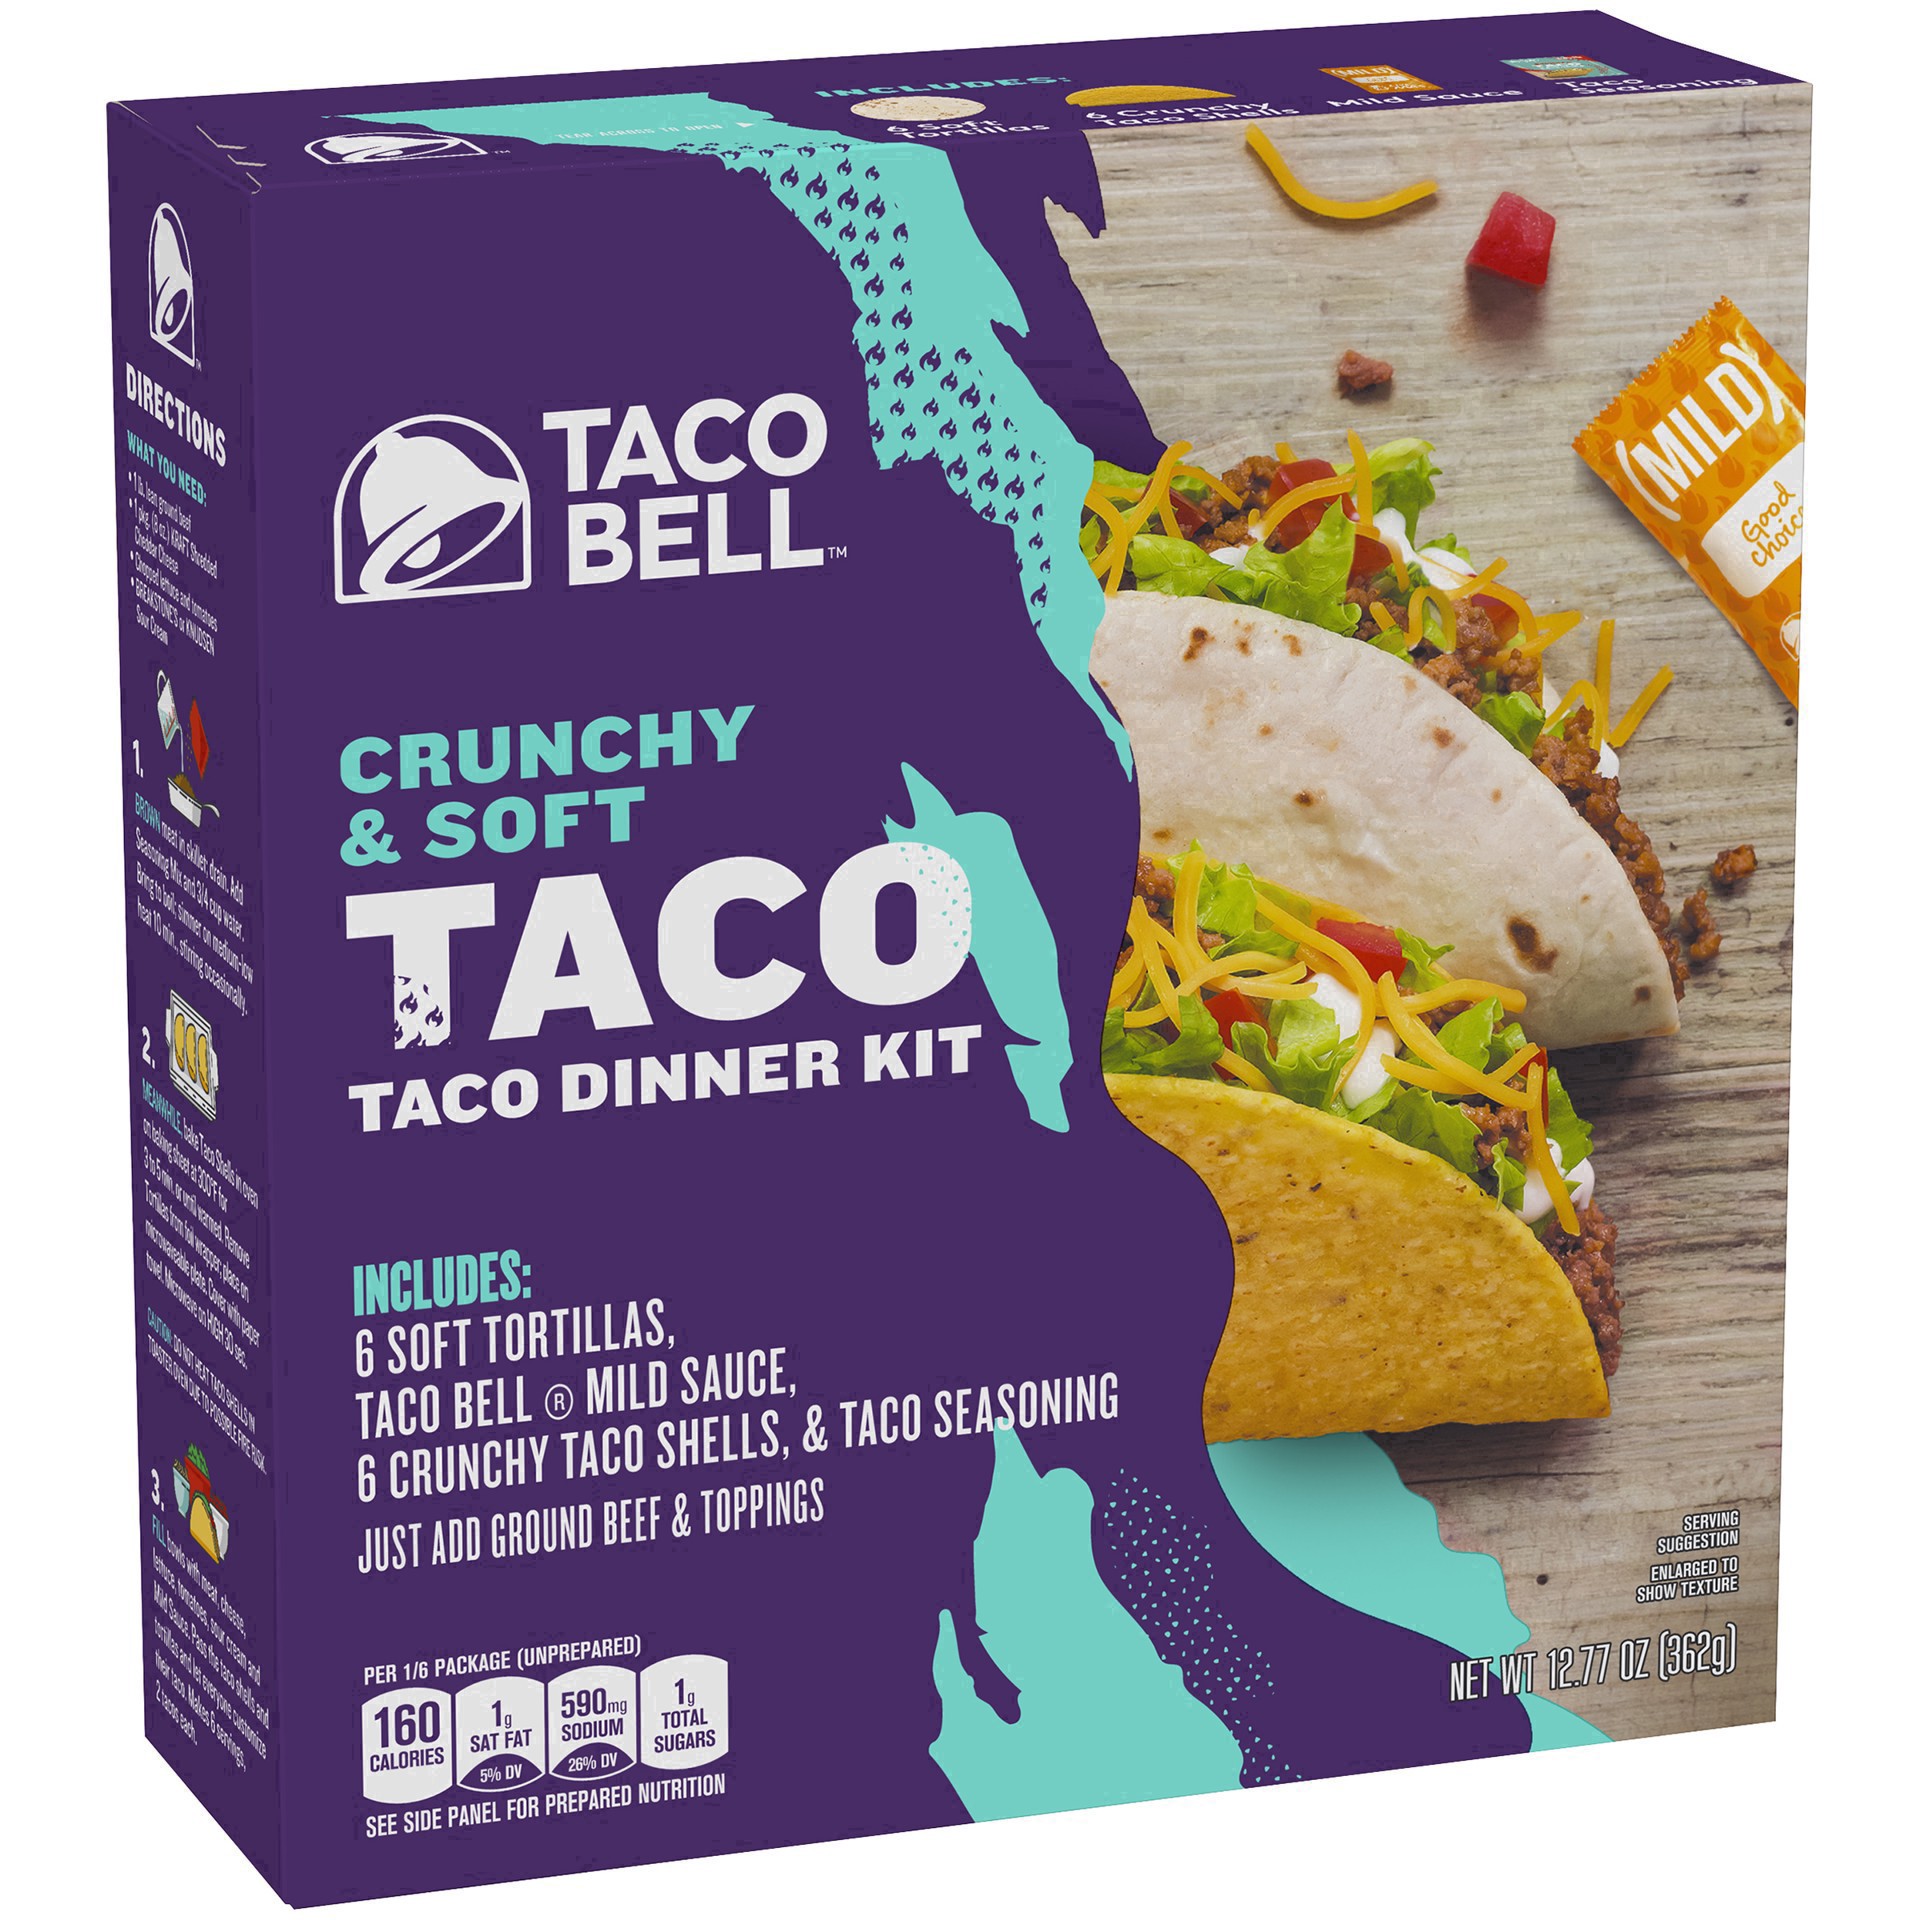 slide 90 of 101, Taco Bell Crunchy & Soft Taco Cravings Kit with 6 Soft Tortillas, 6 Crunchy Taco Shells, Taco Bell Mild Sauce & Seasoning, 12.77 oz Box, 1 ct